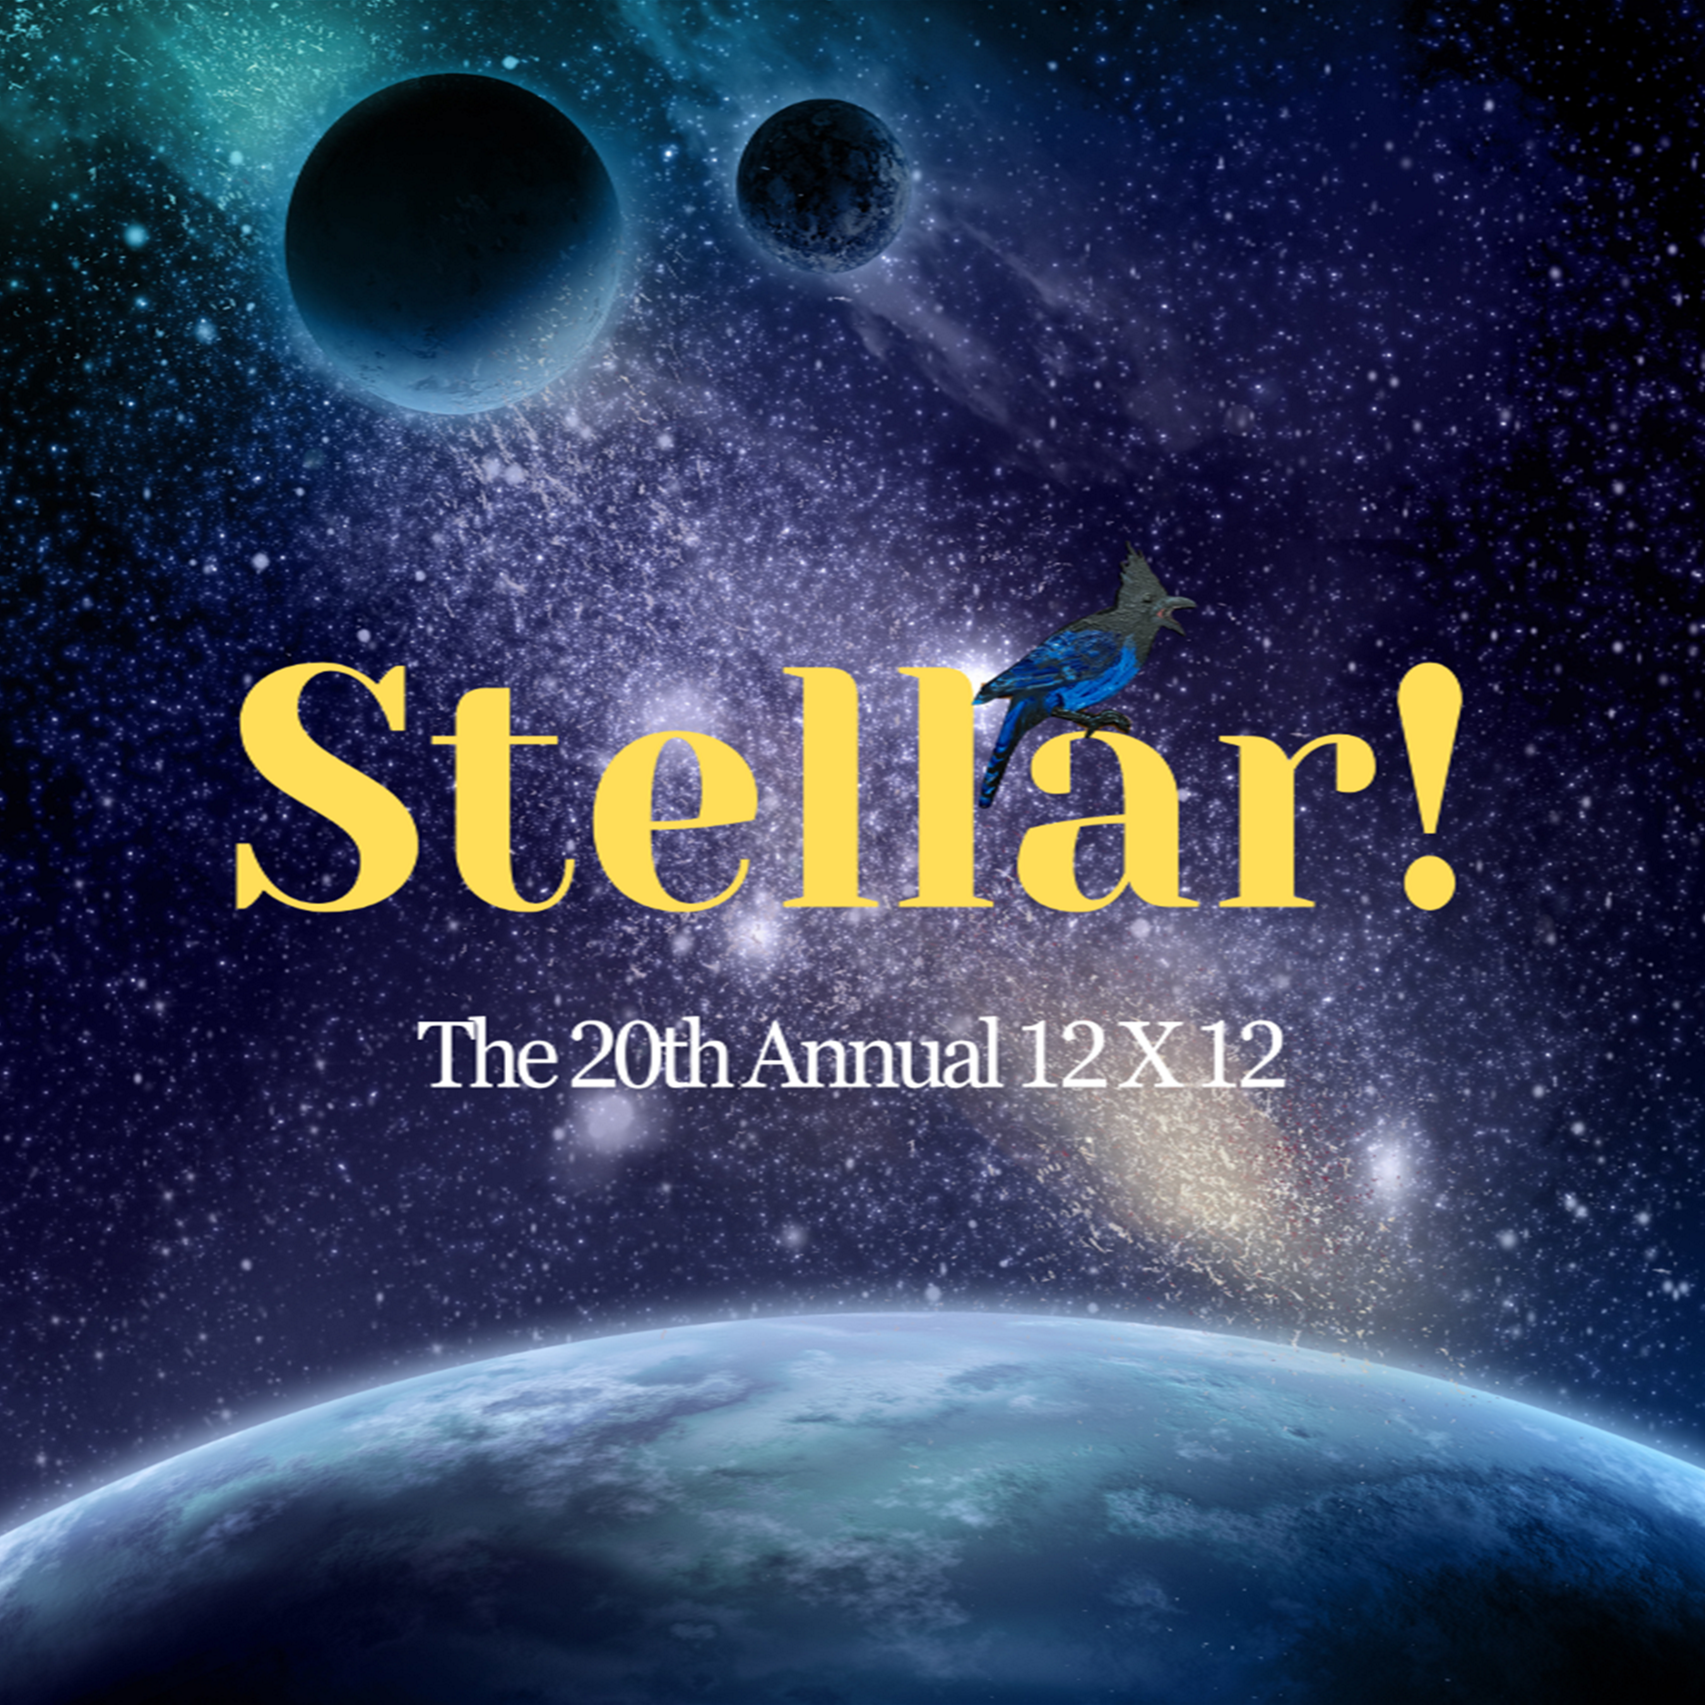 Stellar! The 20th Annual 12x12 Community Art Exhibition March 1st-April 20th